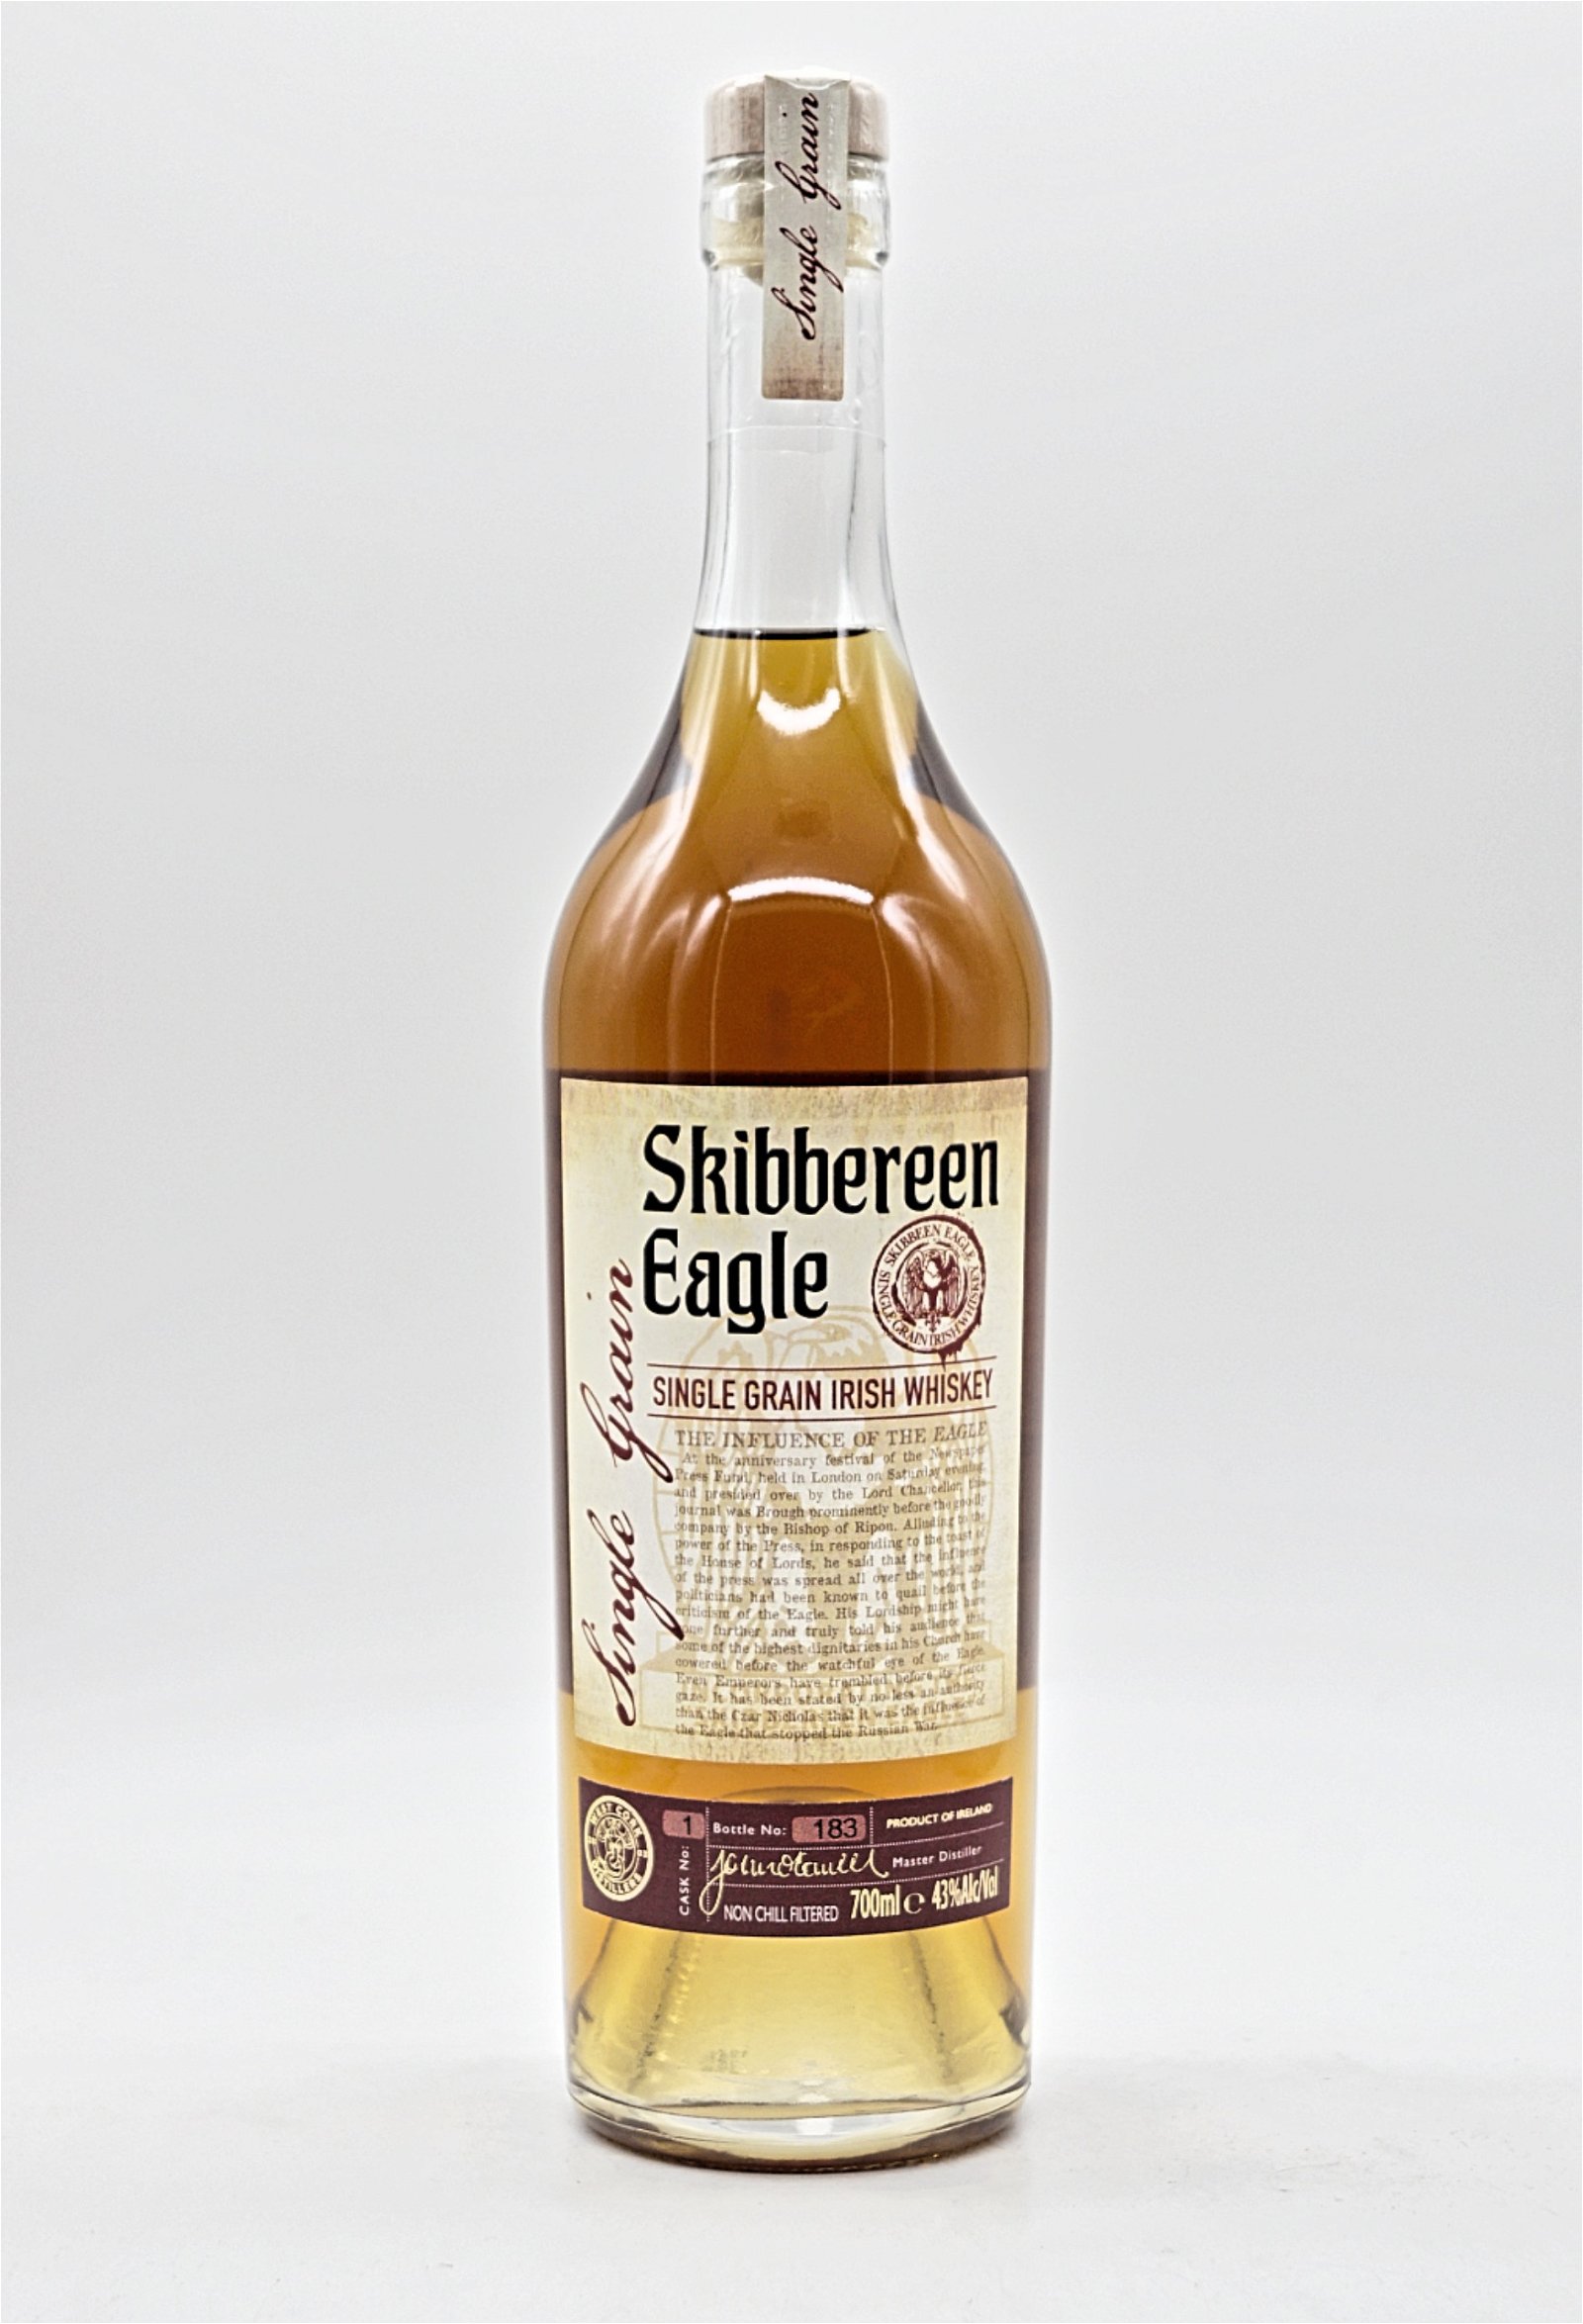 Skibbereen Eagle Cask 1 Single Grain Irish Whiskey